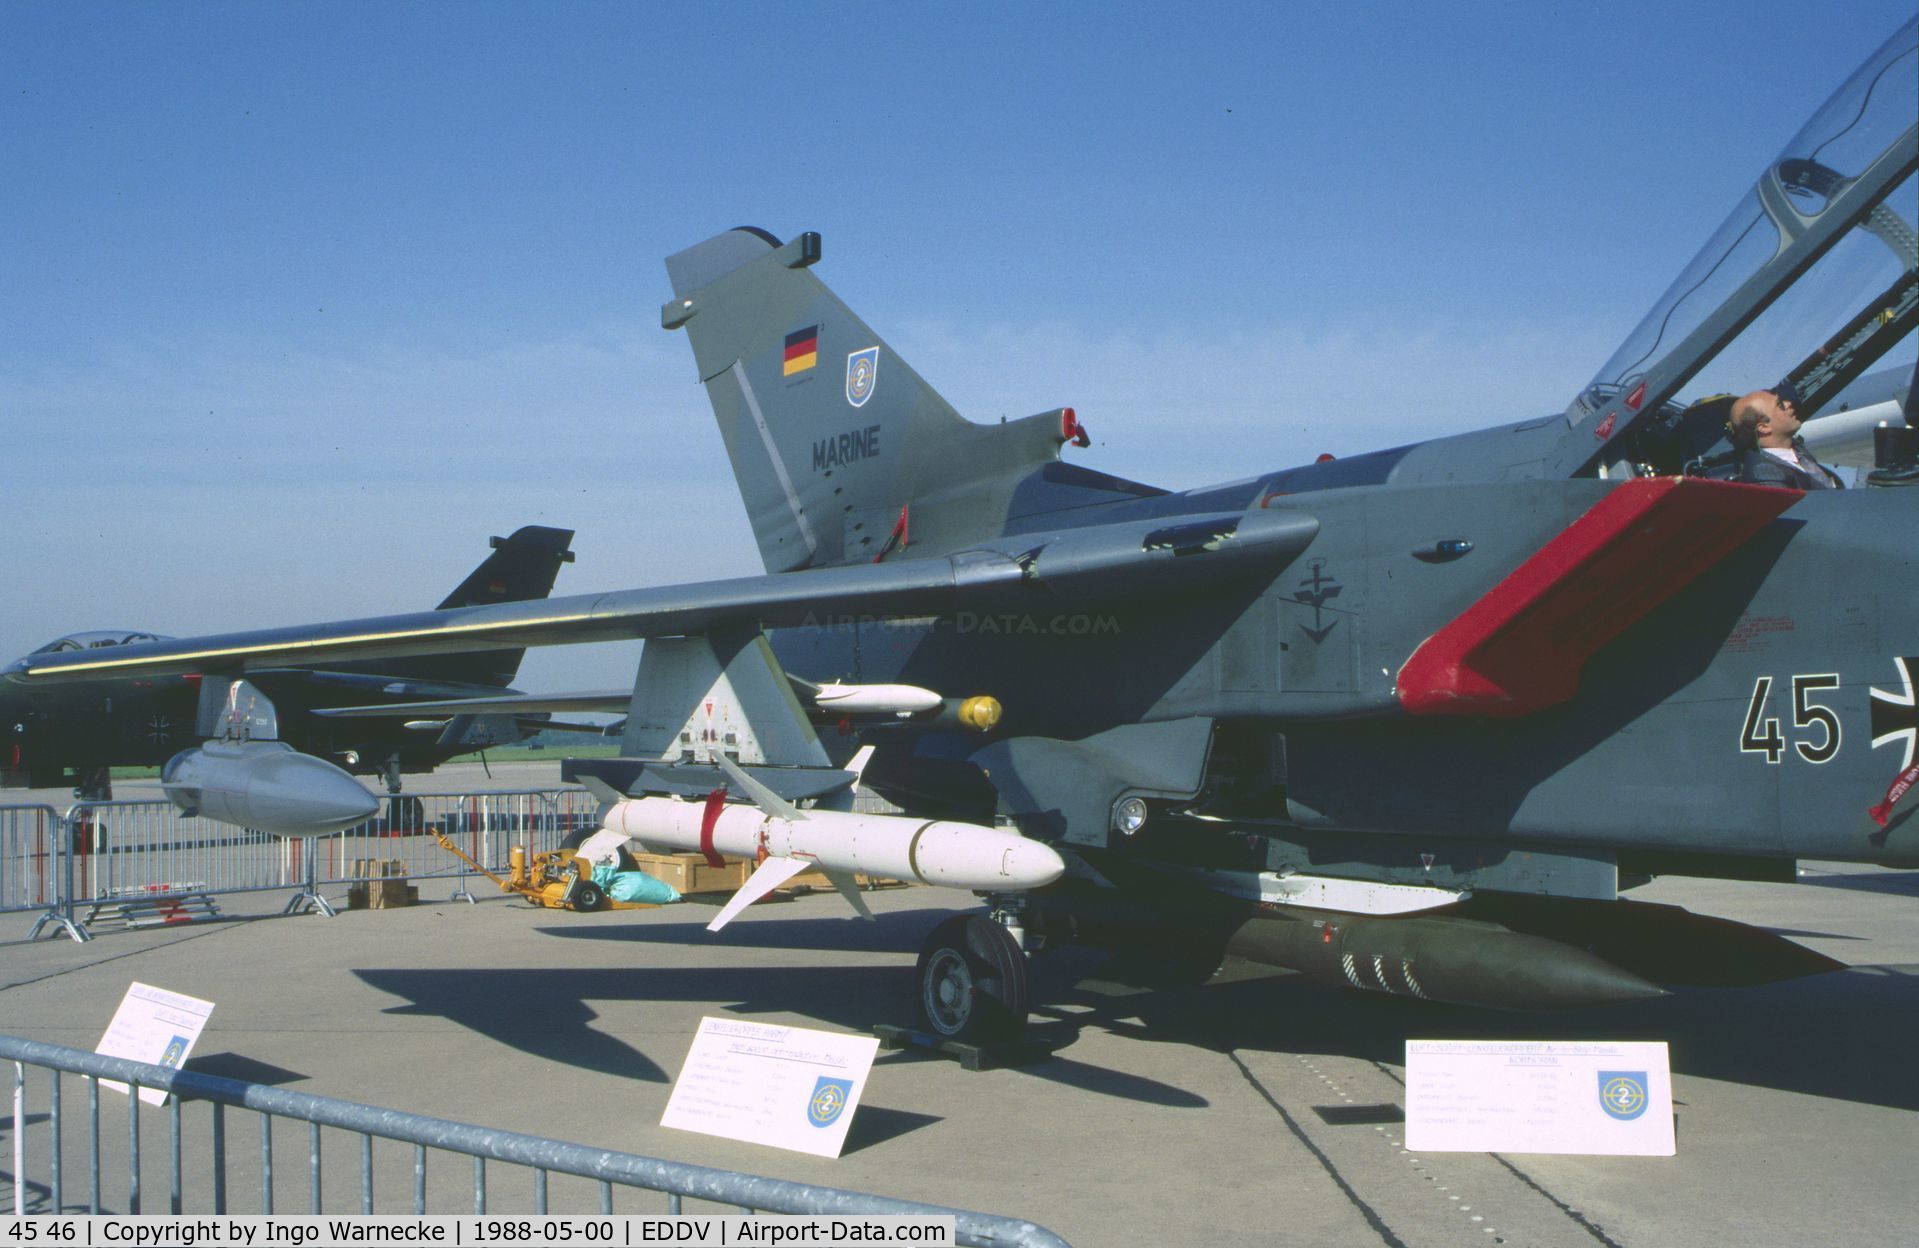 45 46, Panavia Tornado IDS C/N 616/GS194/4246, Panavia Tornado IDS of Marineflieger (German Navy) at the Internationale Luftfahrtausstellung ILA, Hannover 1988